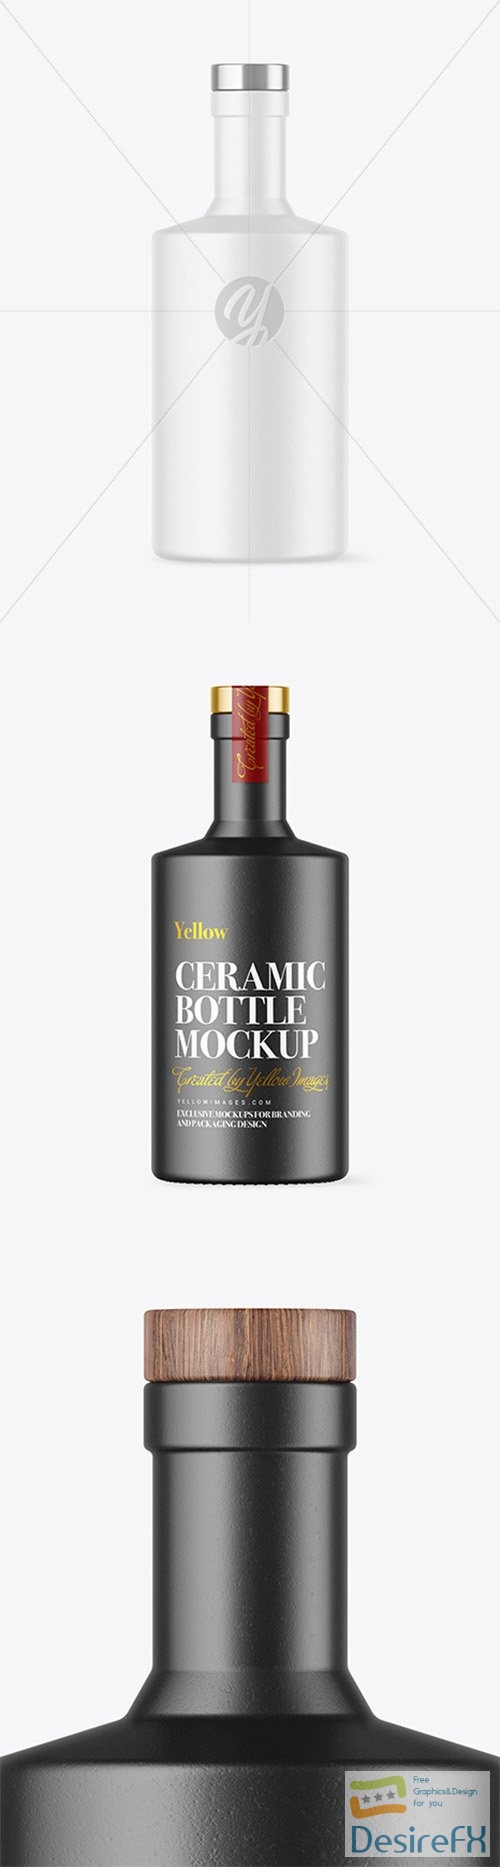 Ceramic Bottle with Wooden Cap Mockup 80770 TIF